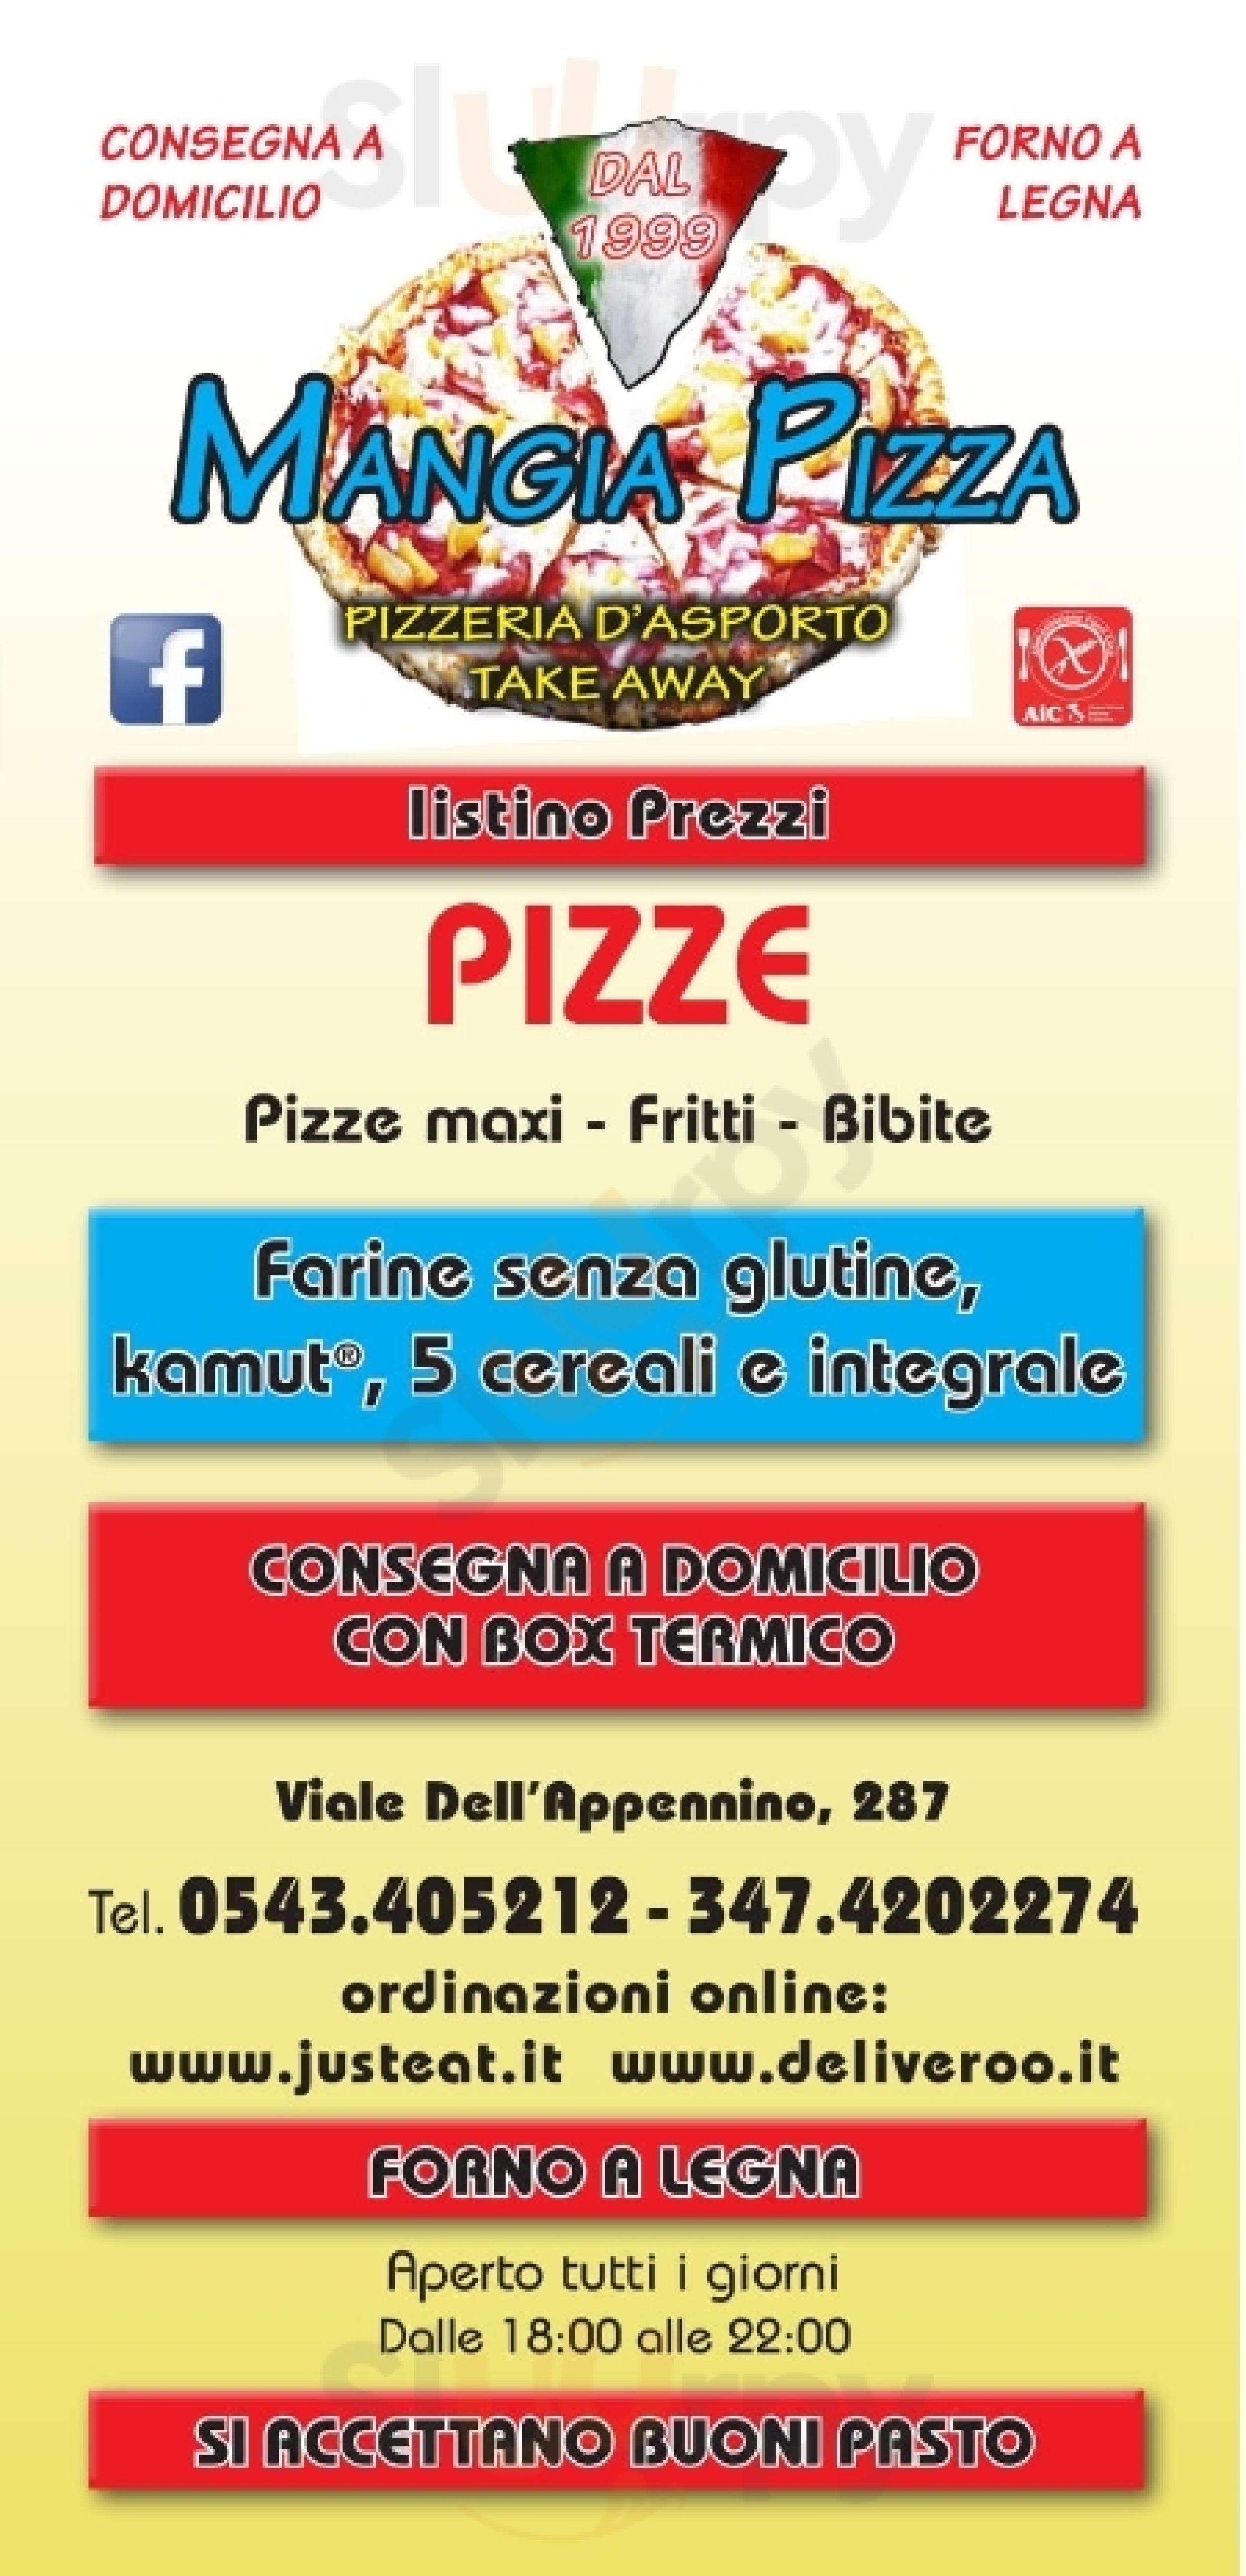 MANGIA PIZZA Forlì menù 1 pagina